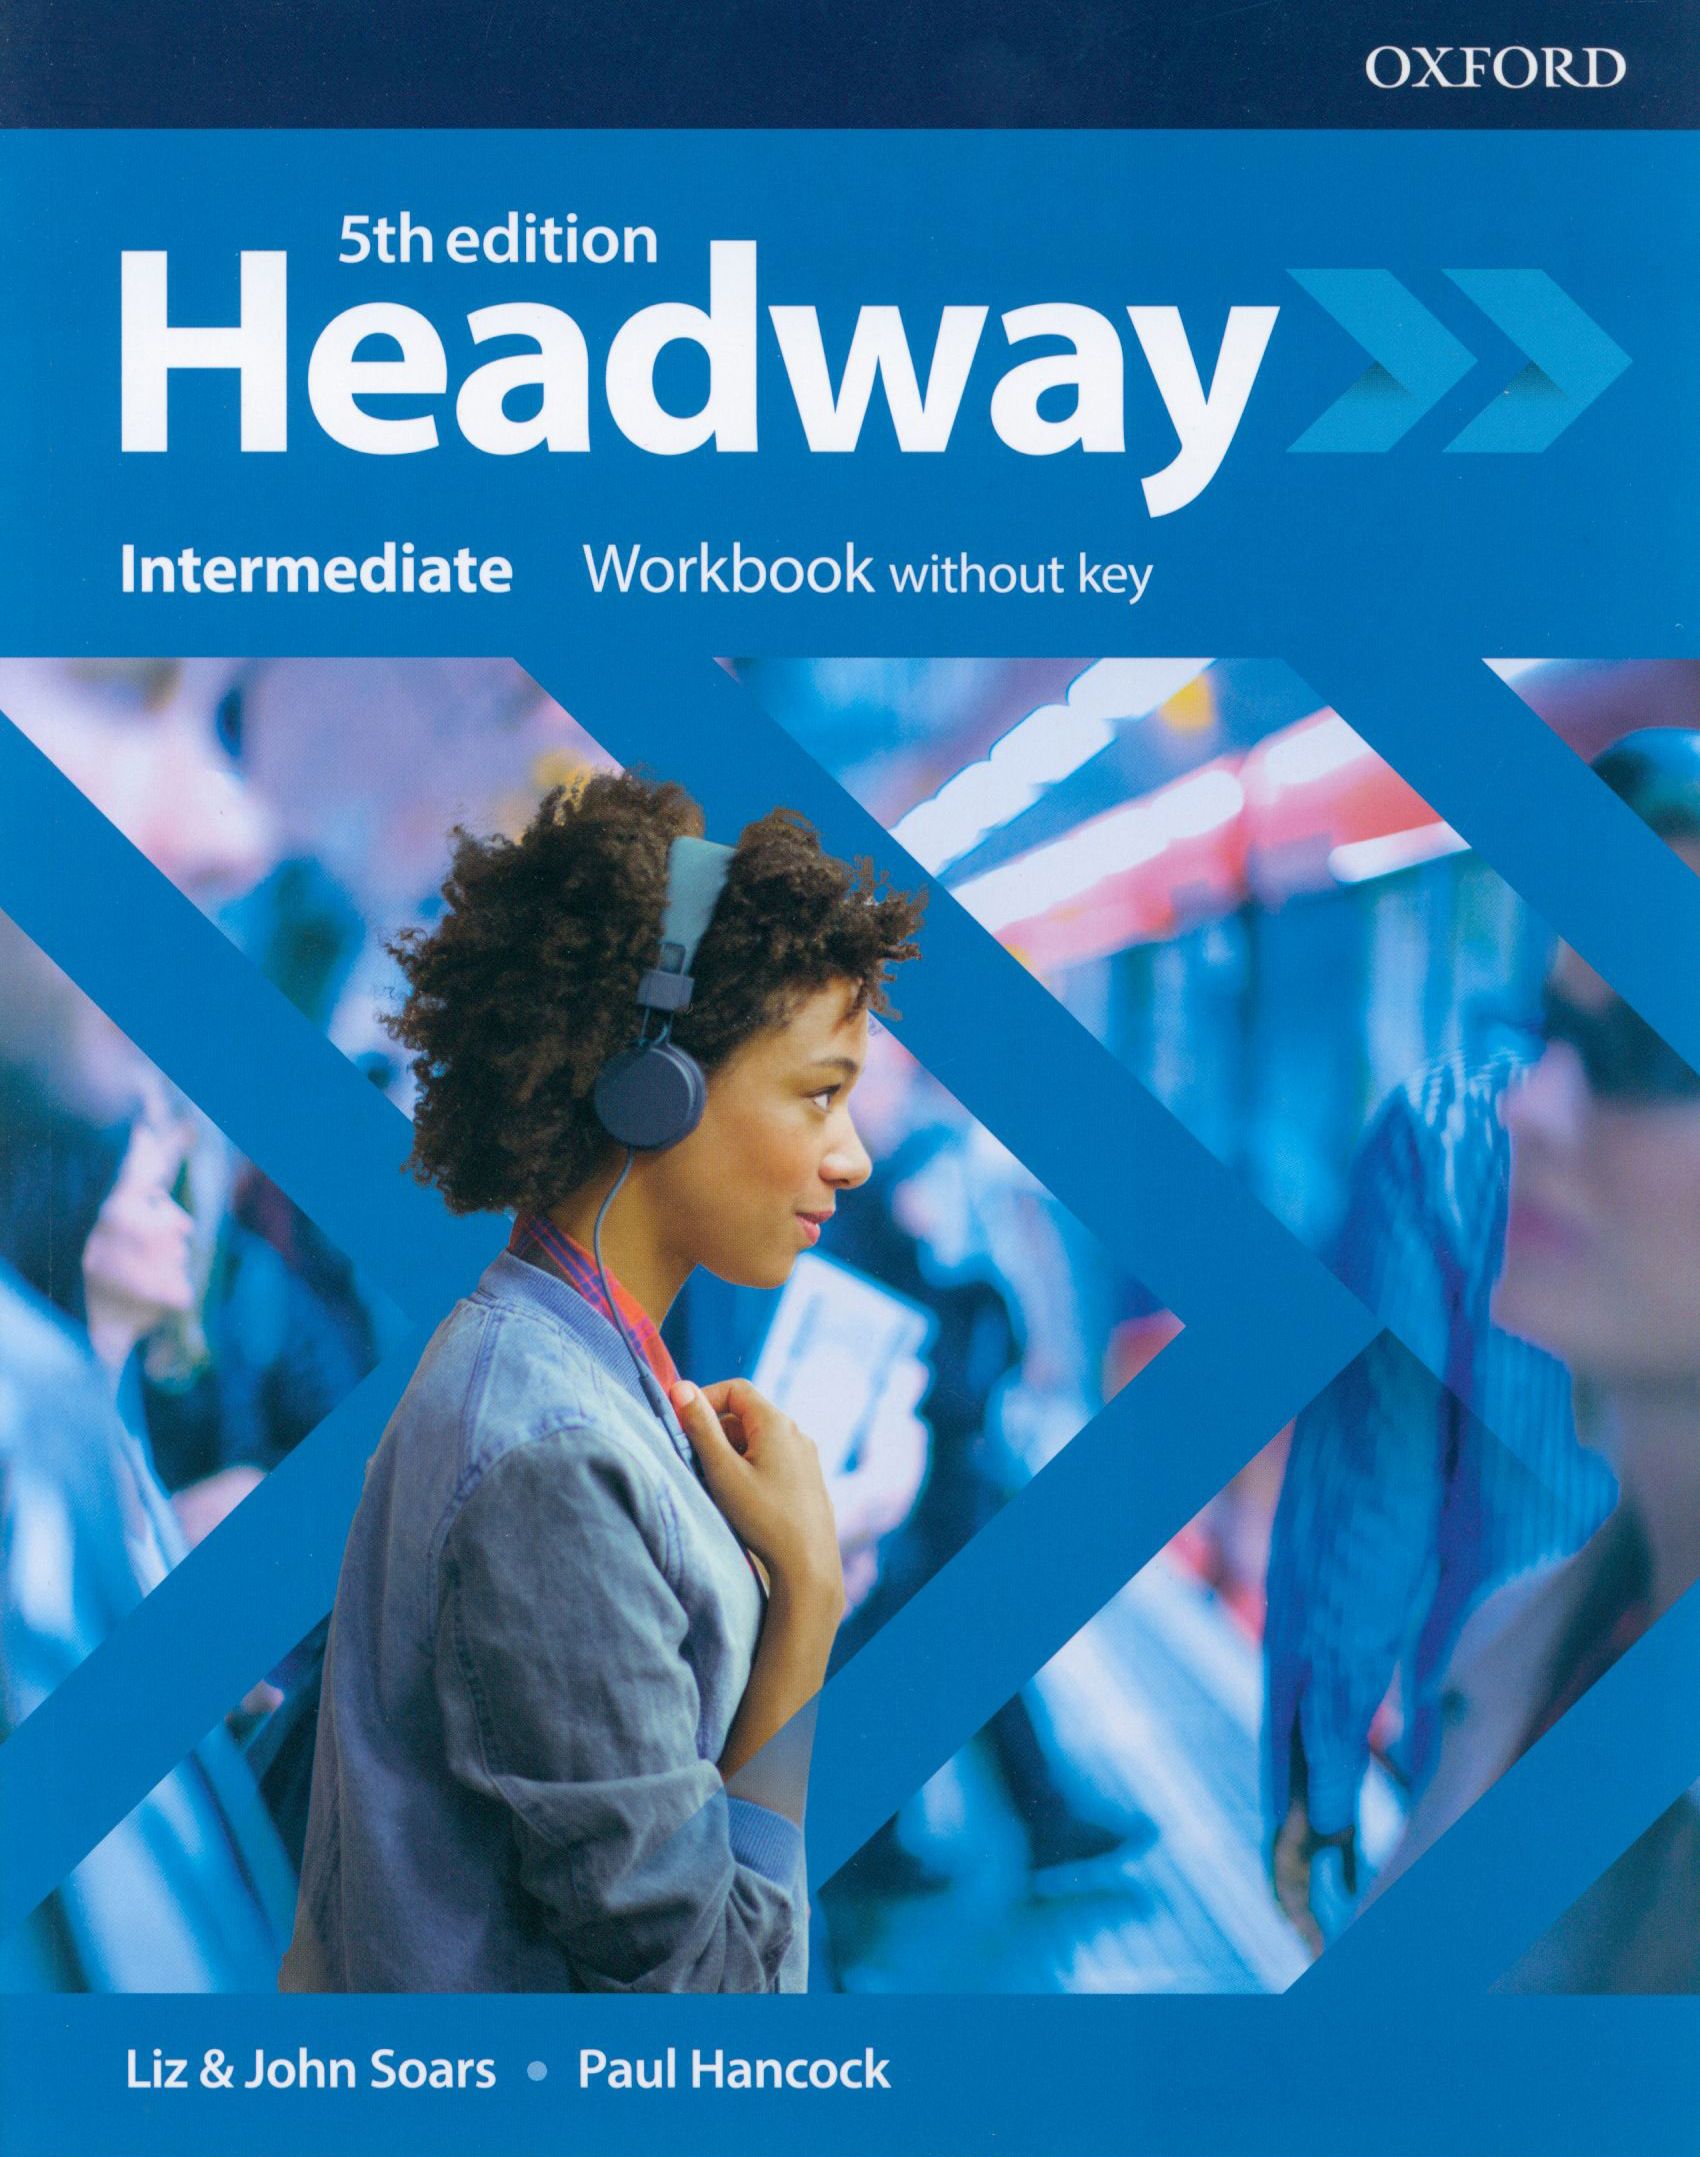 Oxford 5th Edition Headway. Headway, 5th Edition - 2019. Headway pre-Intermediate 5th Edition. Headway books 5th Edition. Headway students book 5th edition